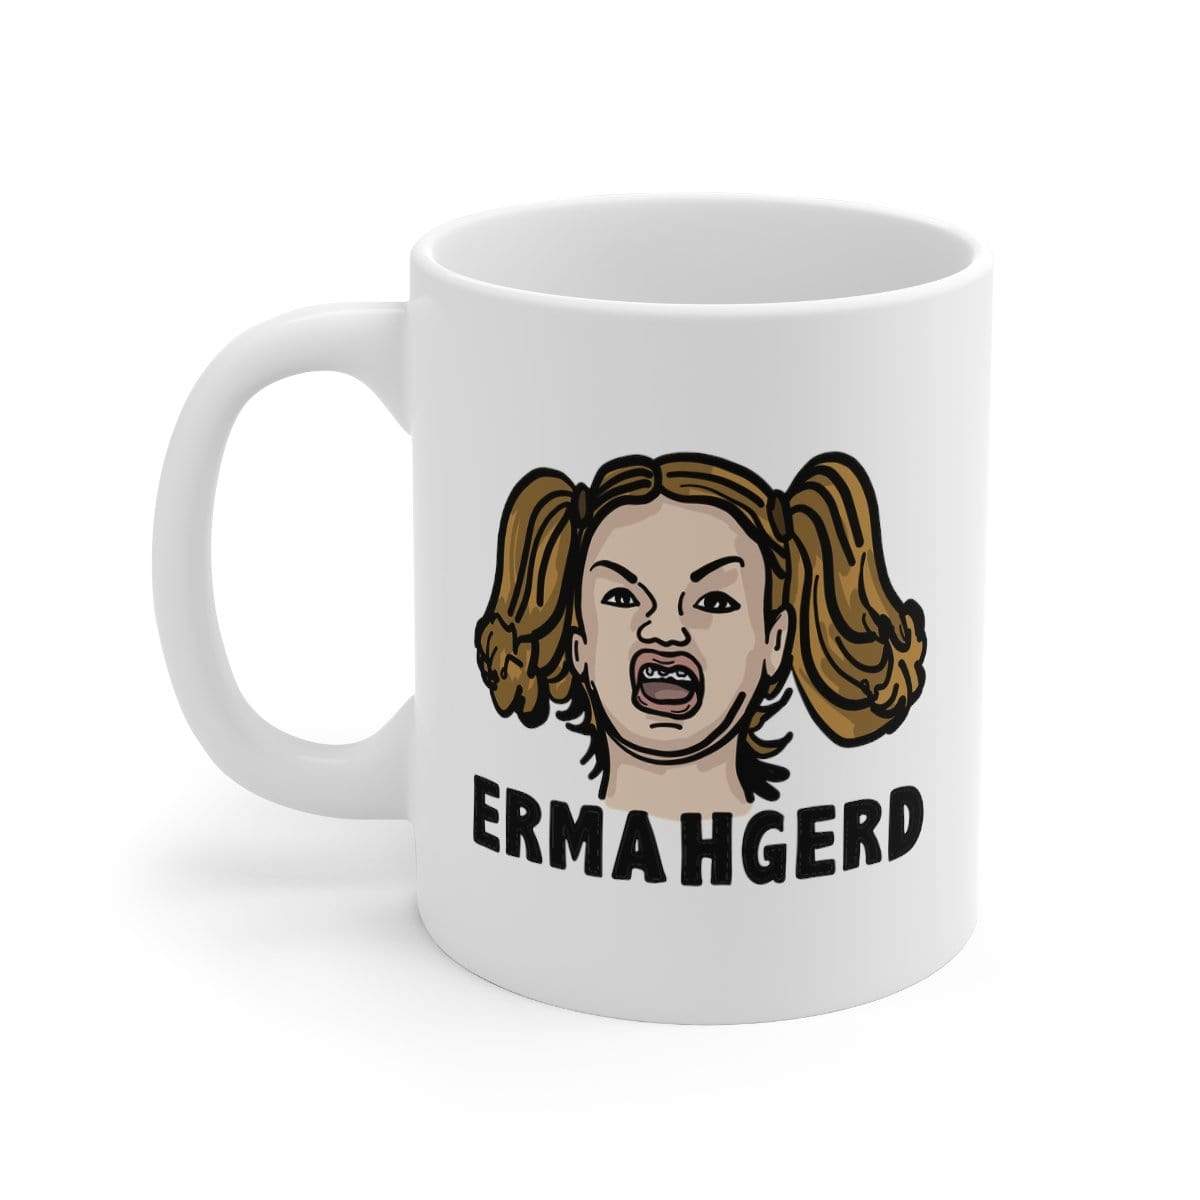 Ermahgerd! 🤓 - Coffee Mug